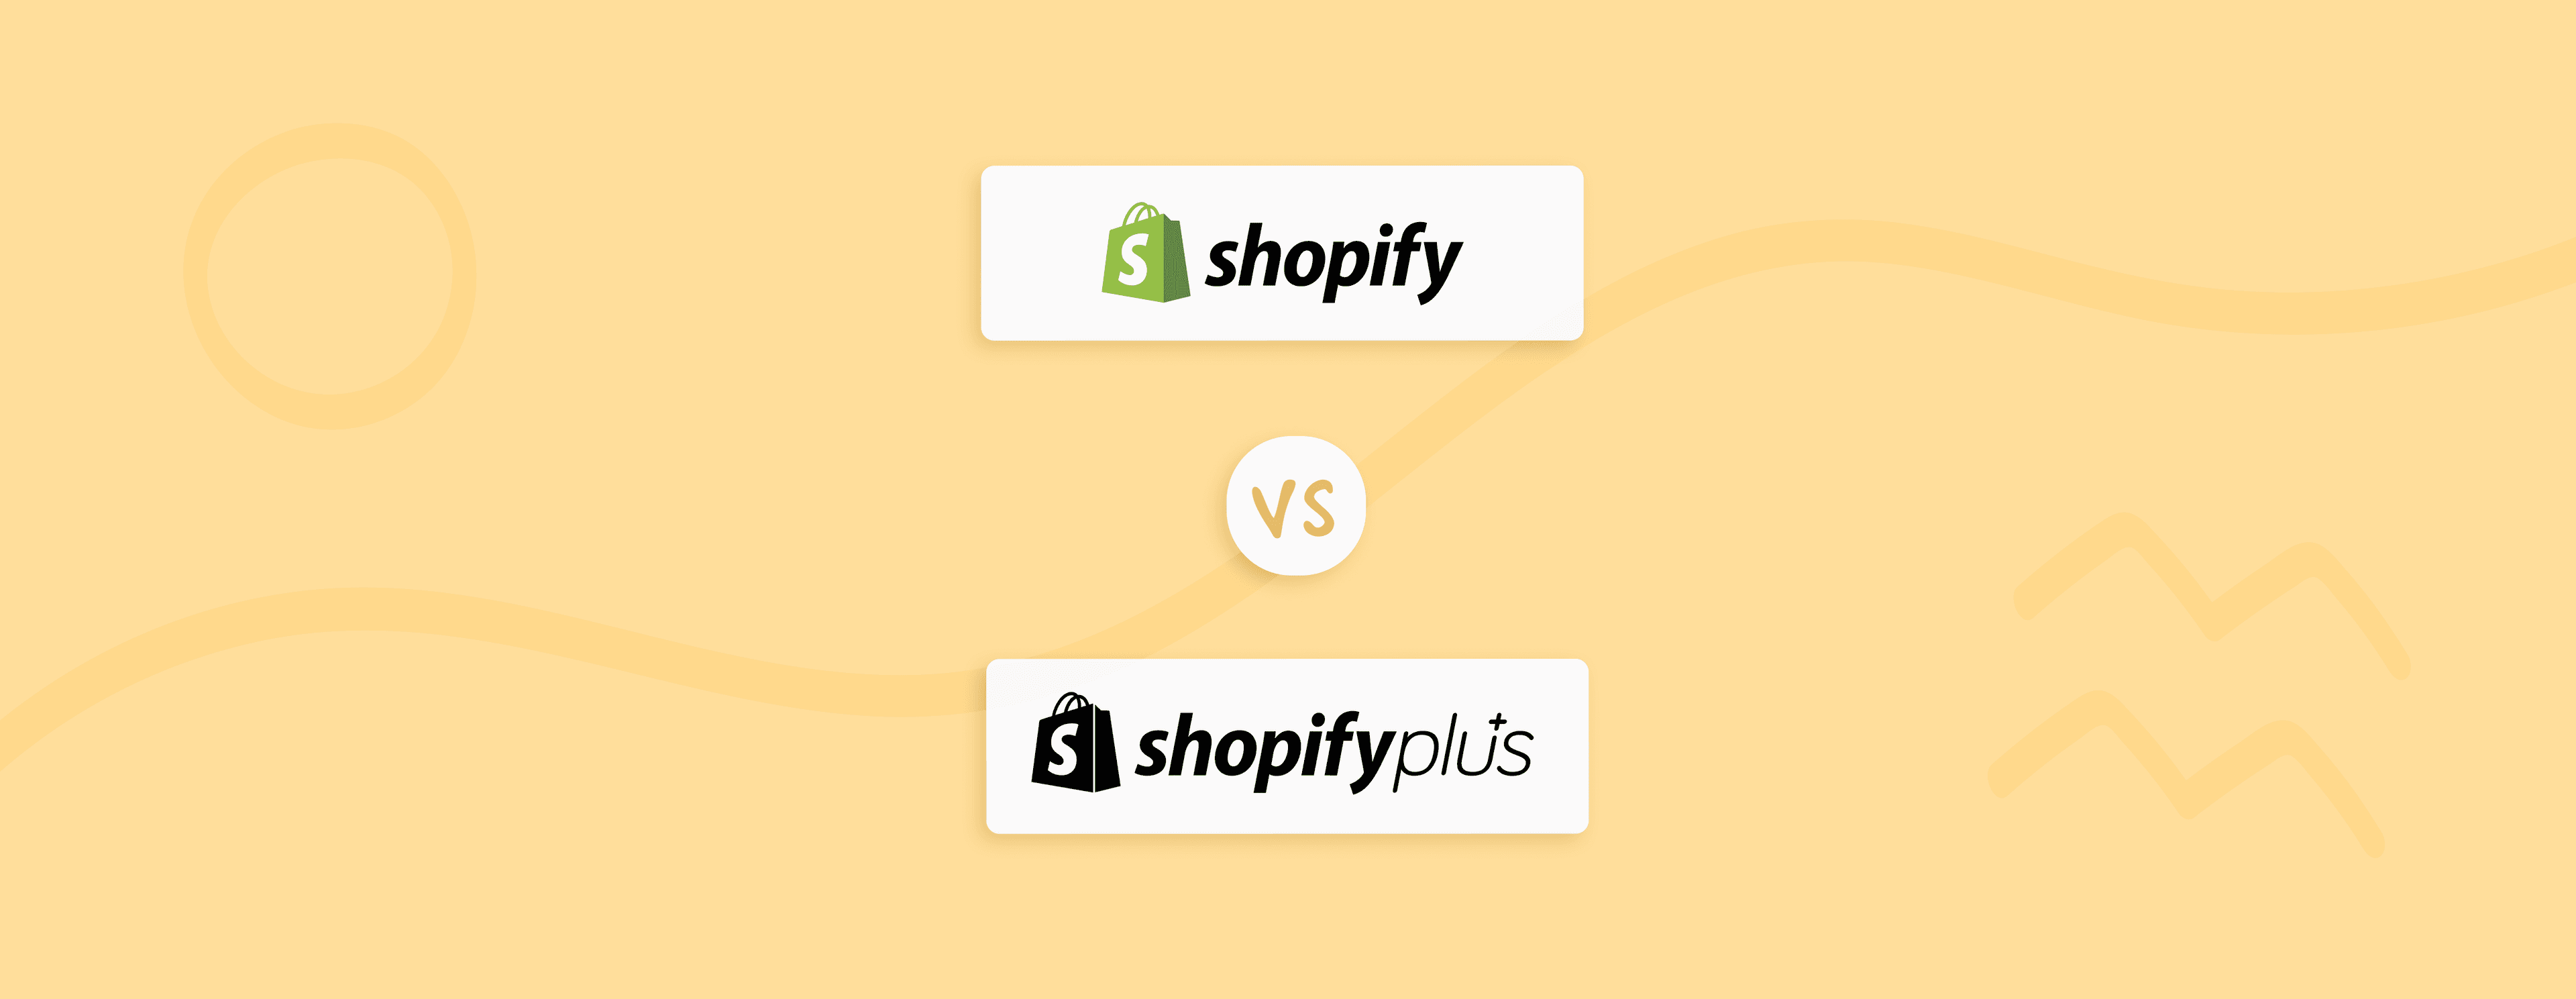 shopify vs shopify plus cover photo